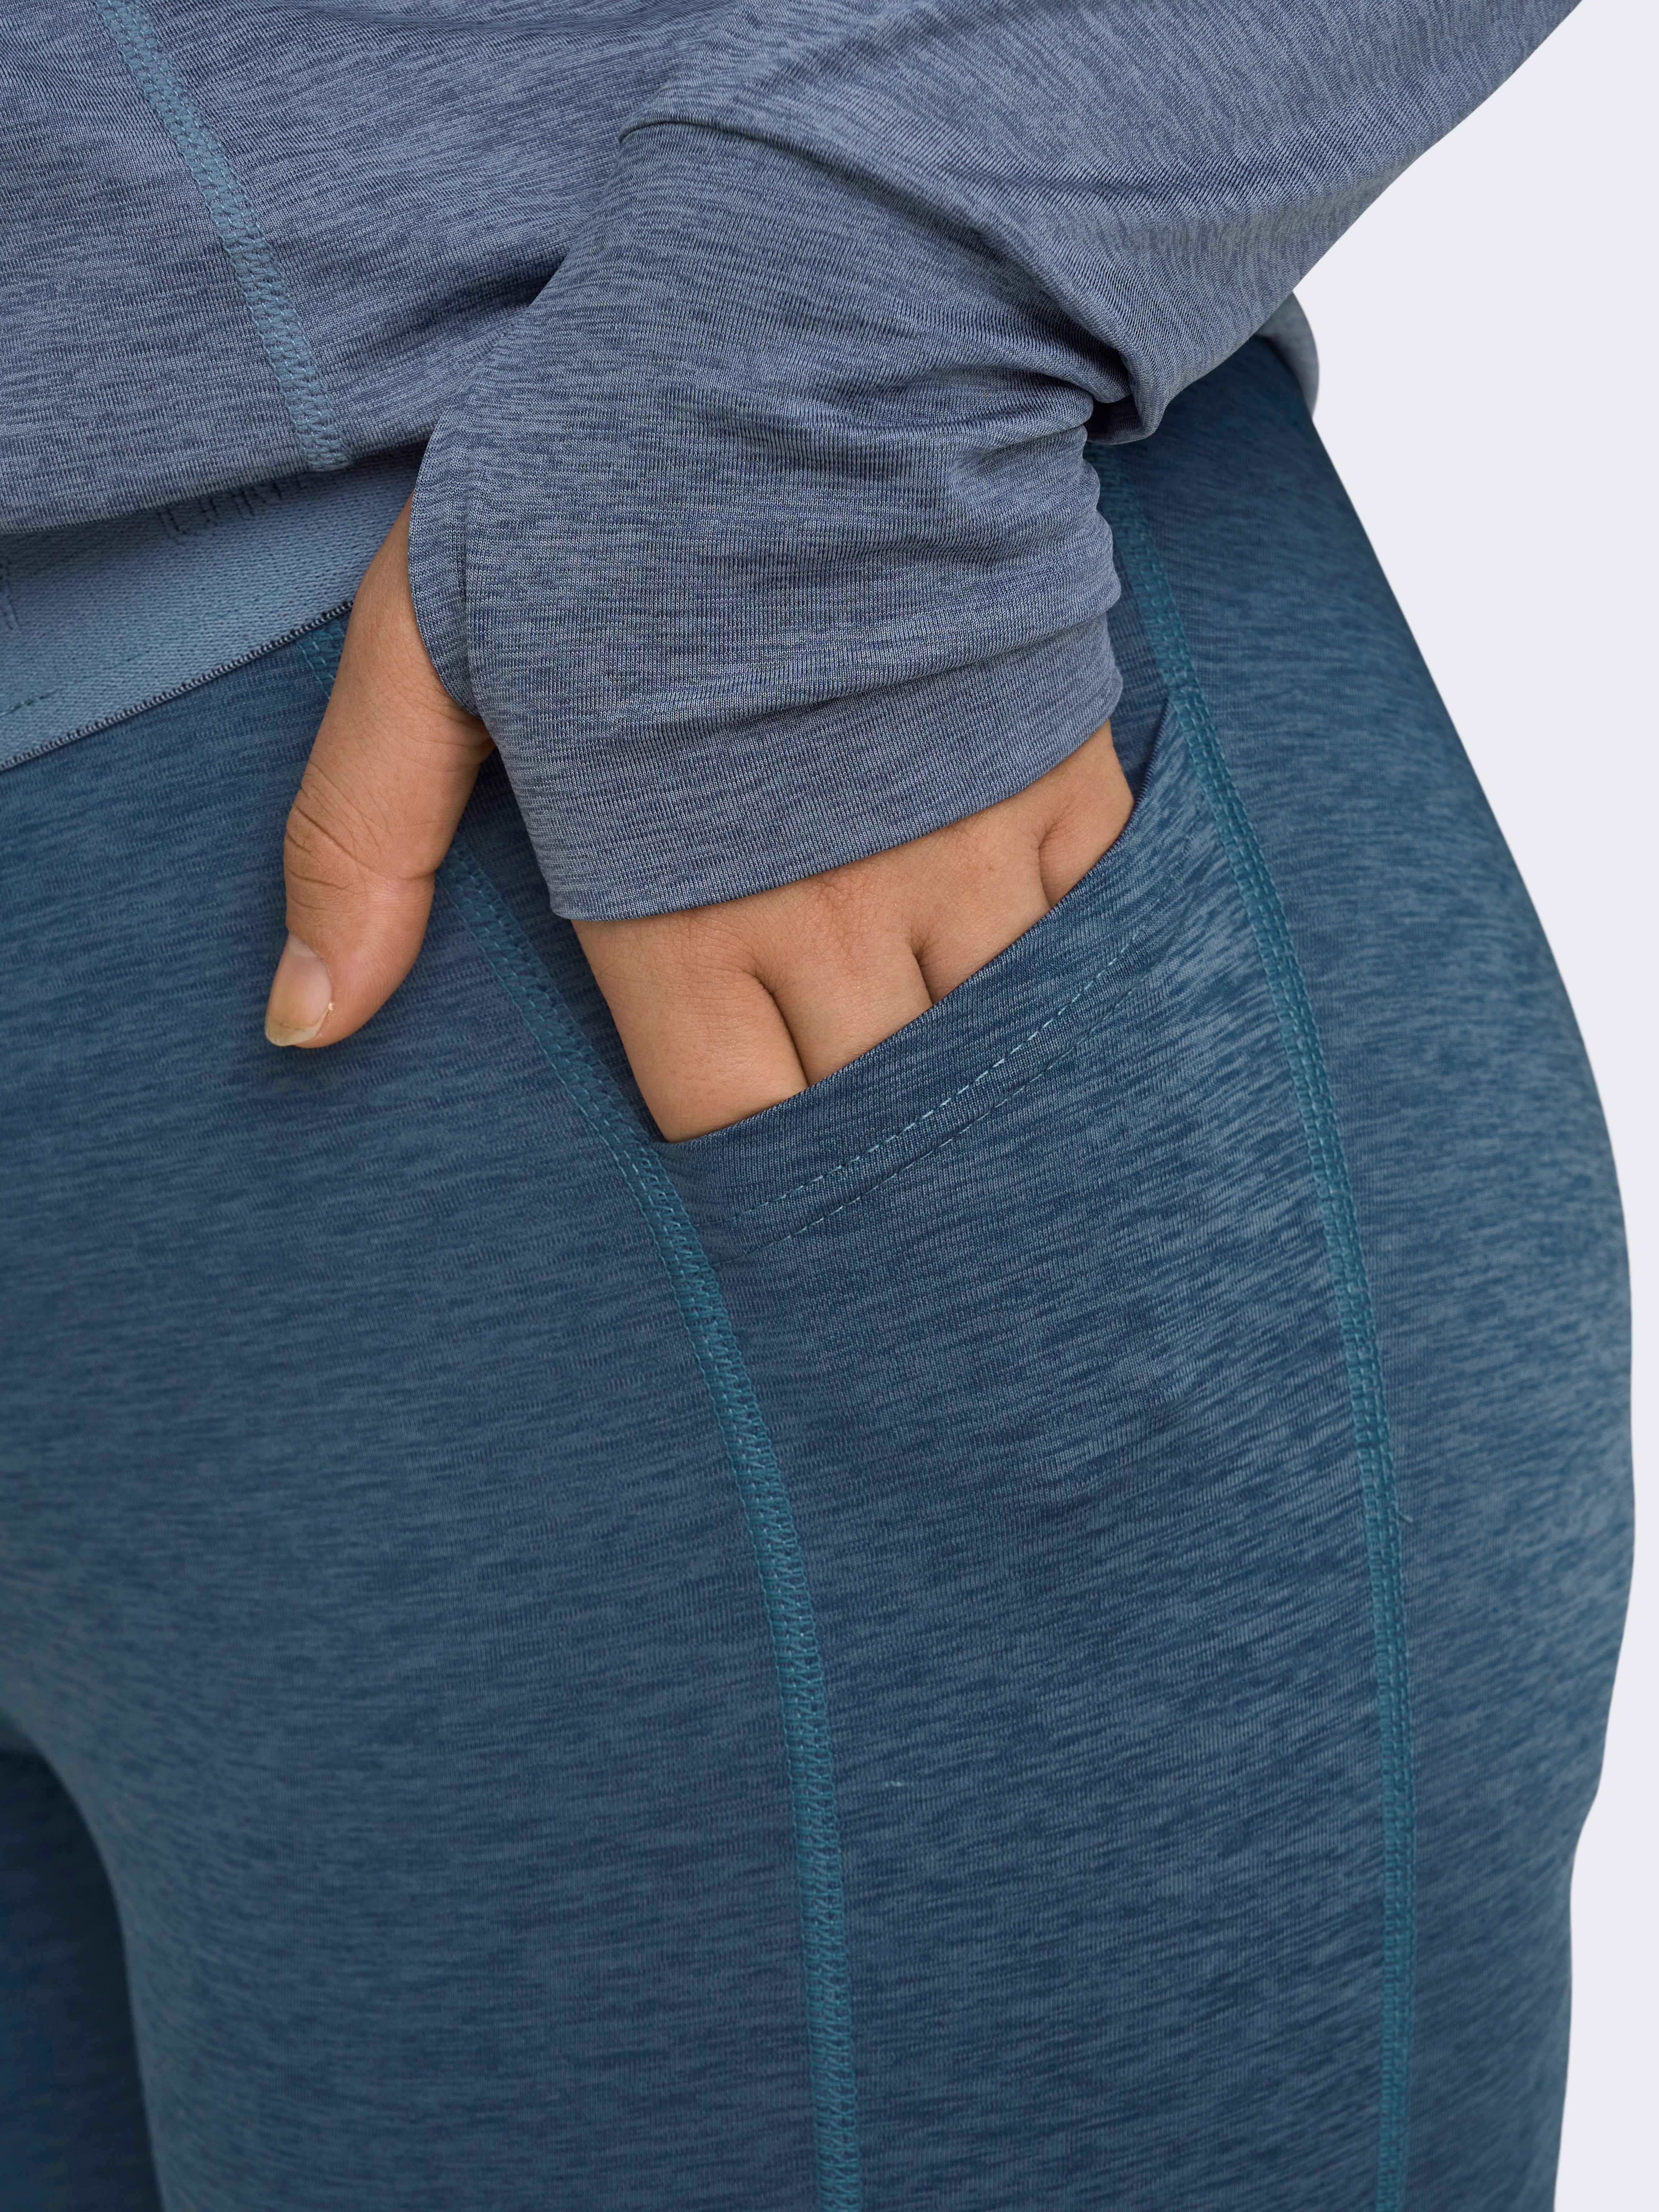 Push Up High Waist Warm Jeans Leggings Women Elastic Jeggings Denim Pants  Slim | eBay